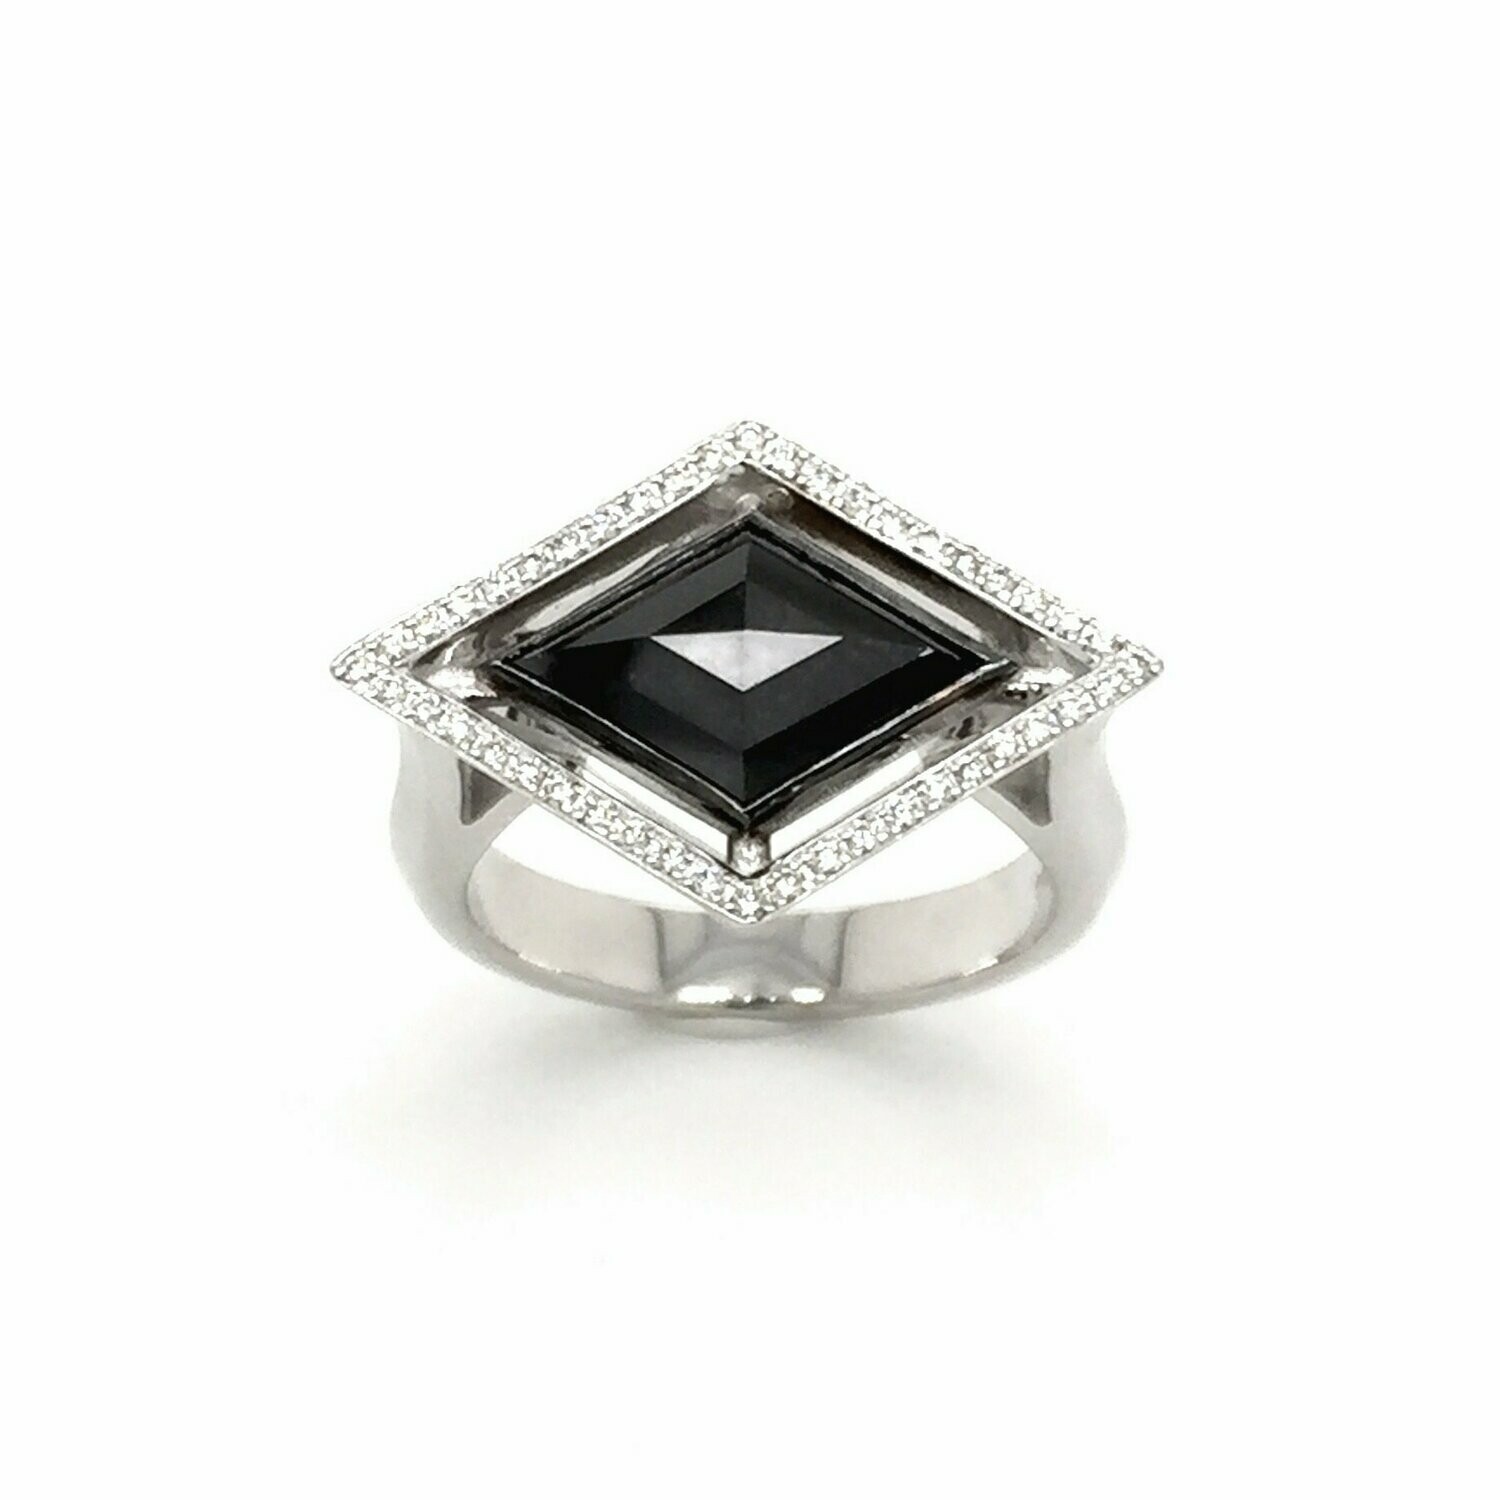 Black Diamond Engagement Ring, Plain Band Black Diamond Ring in White Gold, Square  Black Diamond, Silver Ring, Holiday Gift for Girlfriend - Etsy